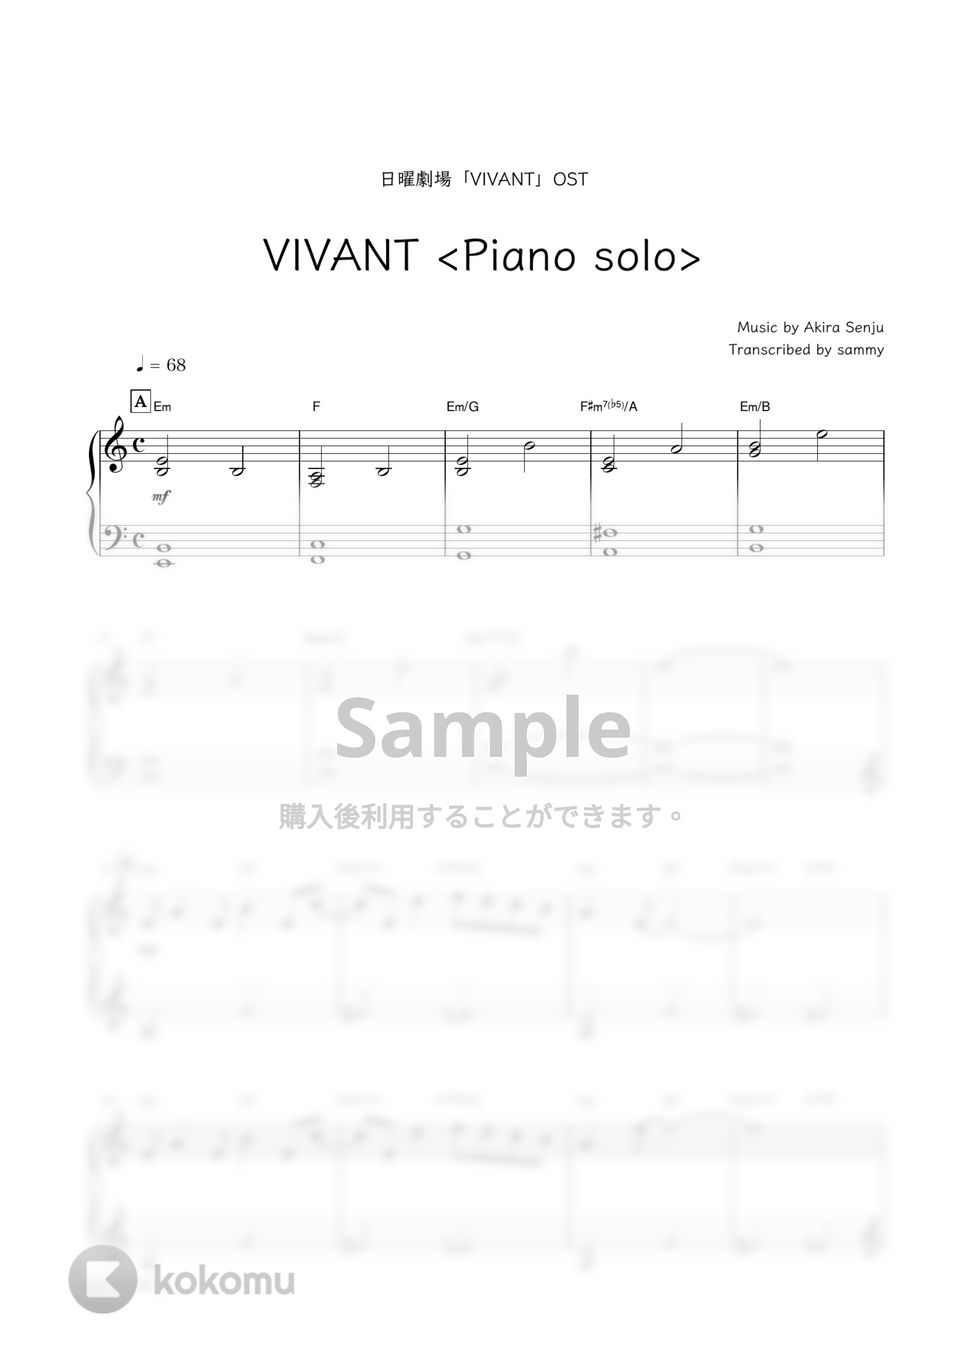 日曜劇場『VIVANT』OST・千住明 - VIVANT ＜Piano solo＞ by sammy